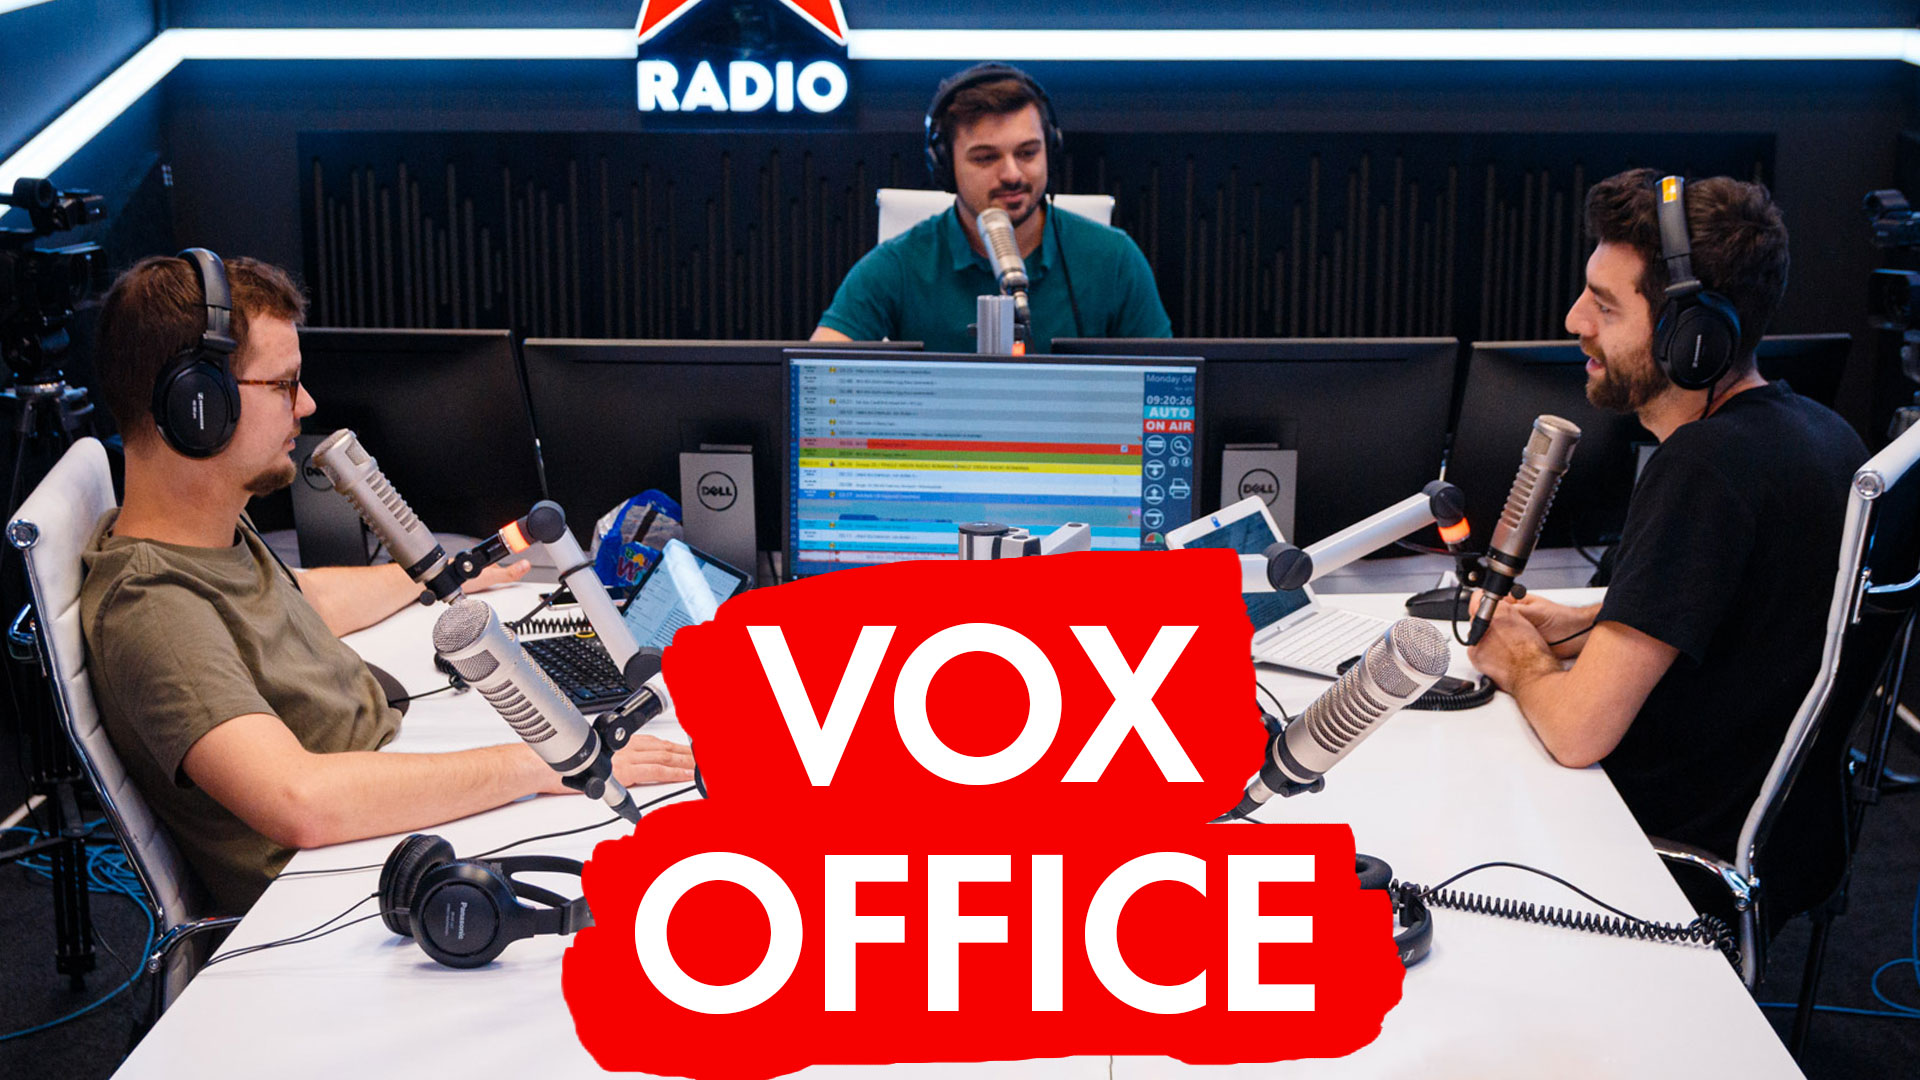 vanessa vox office